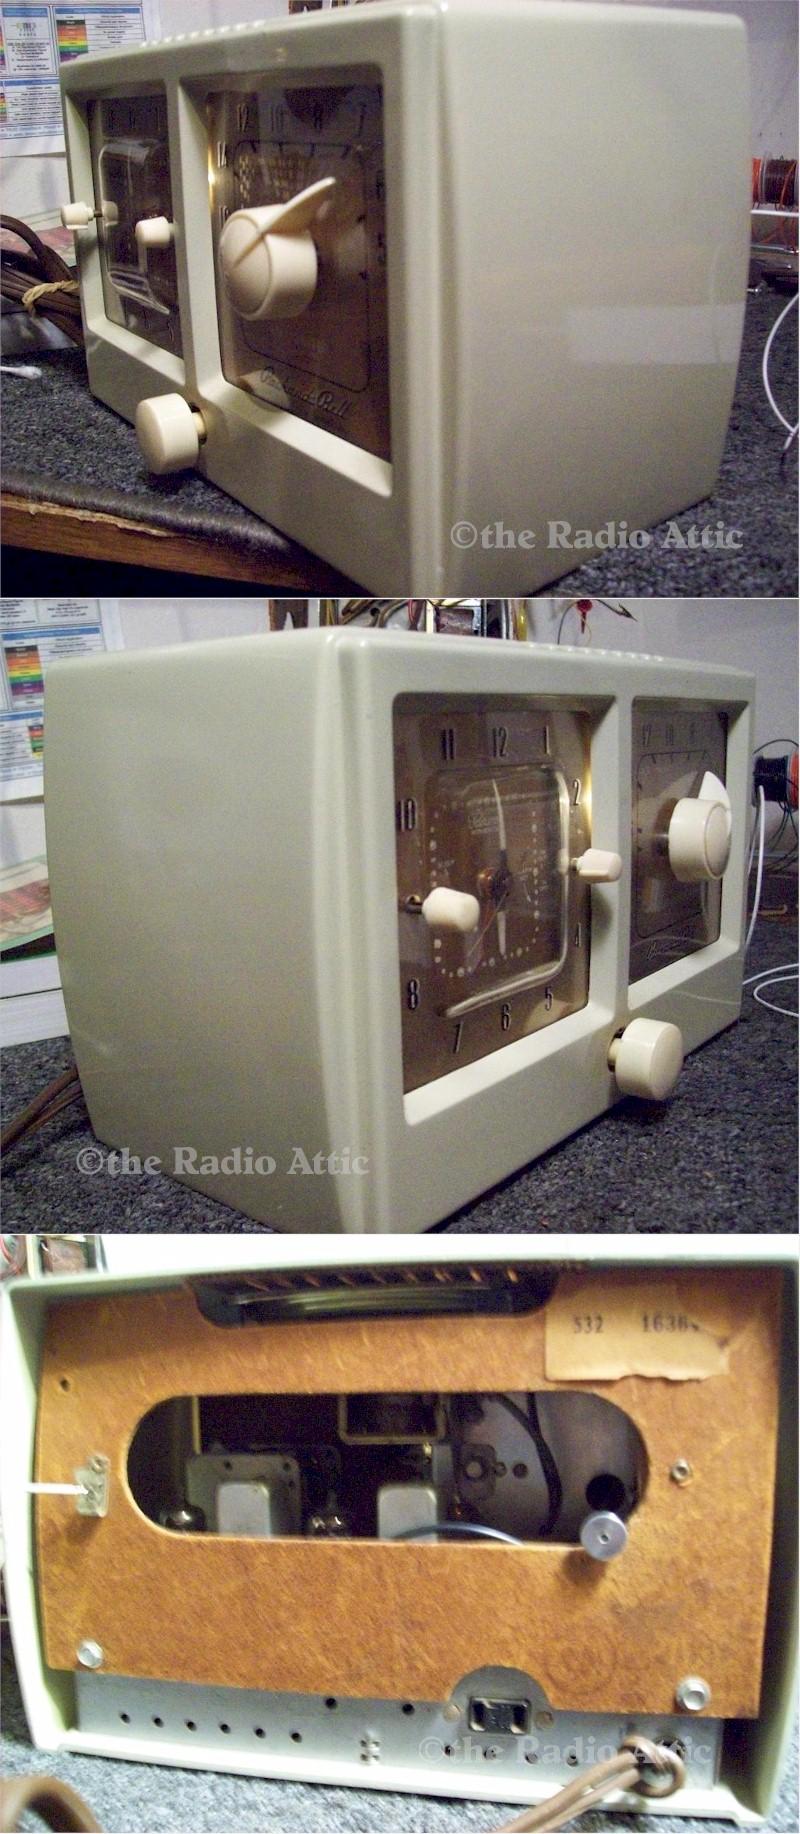 Packard-Bell 532 Clock Radio